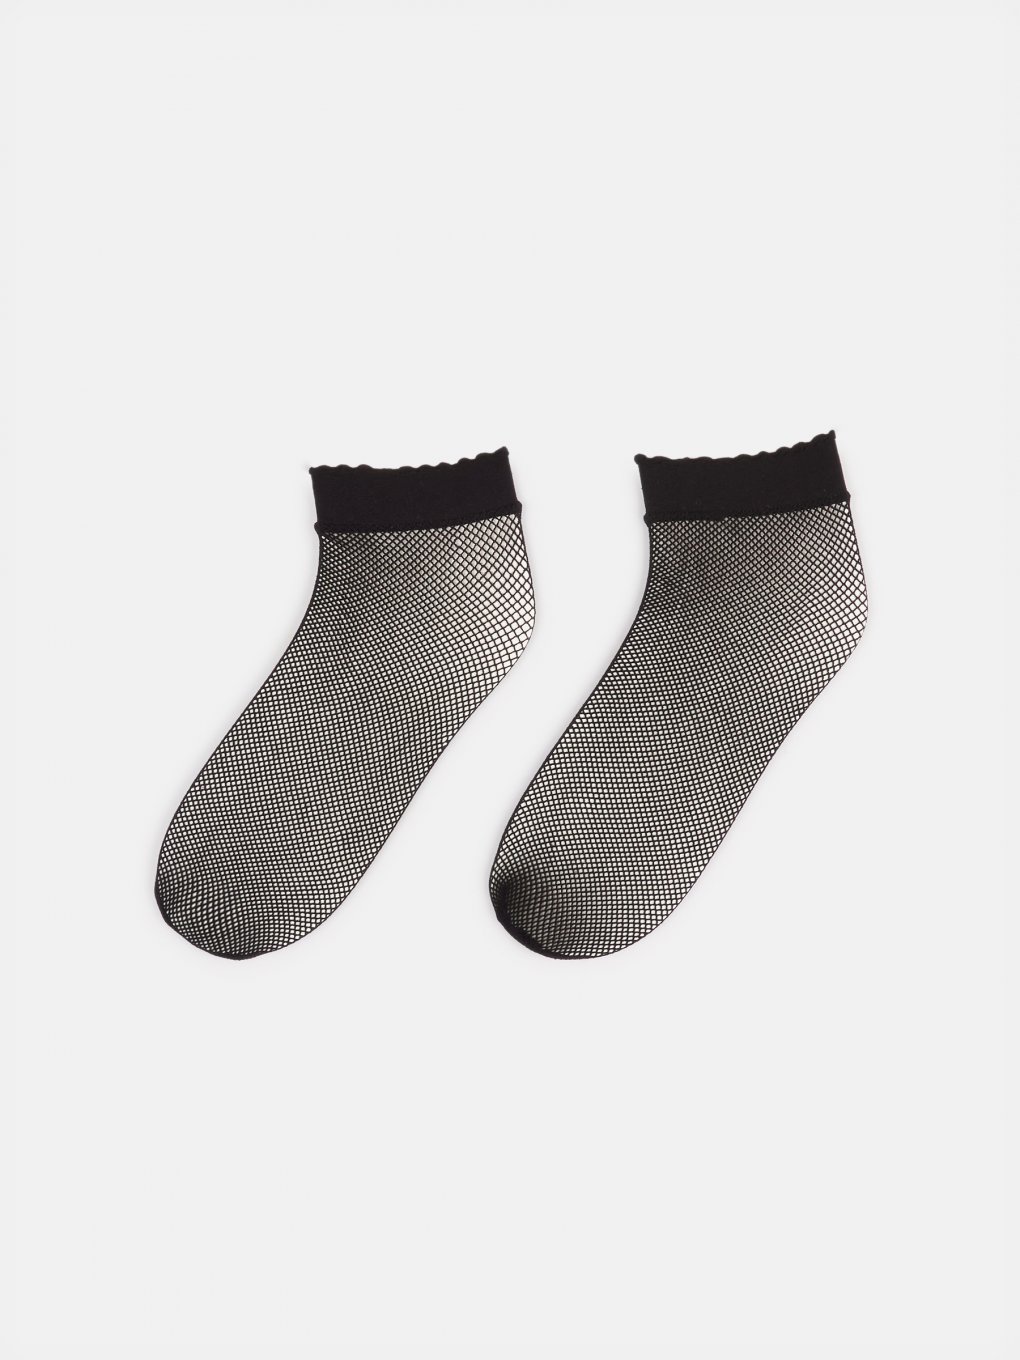 Mesh nylon socks